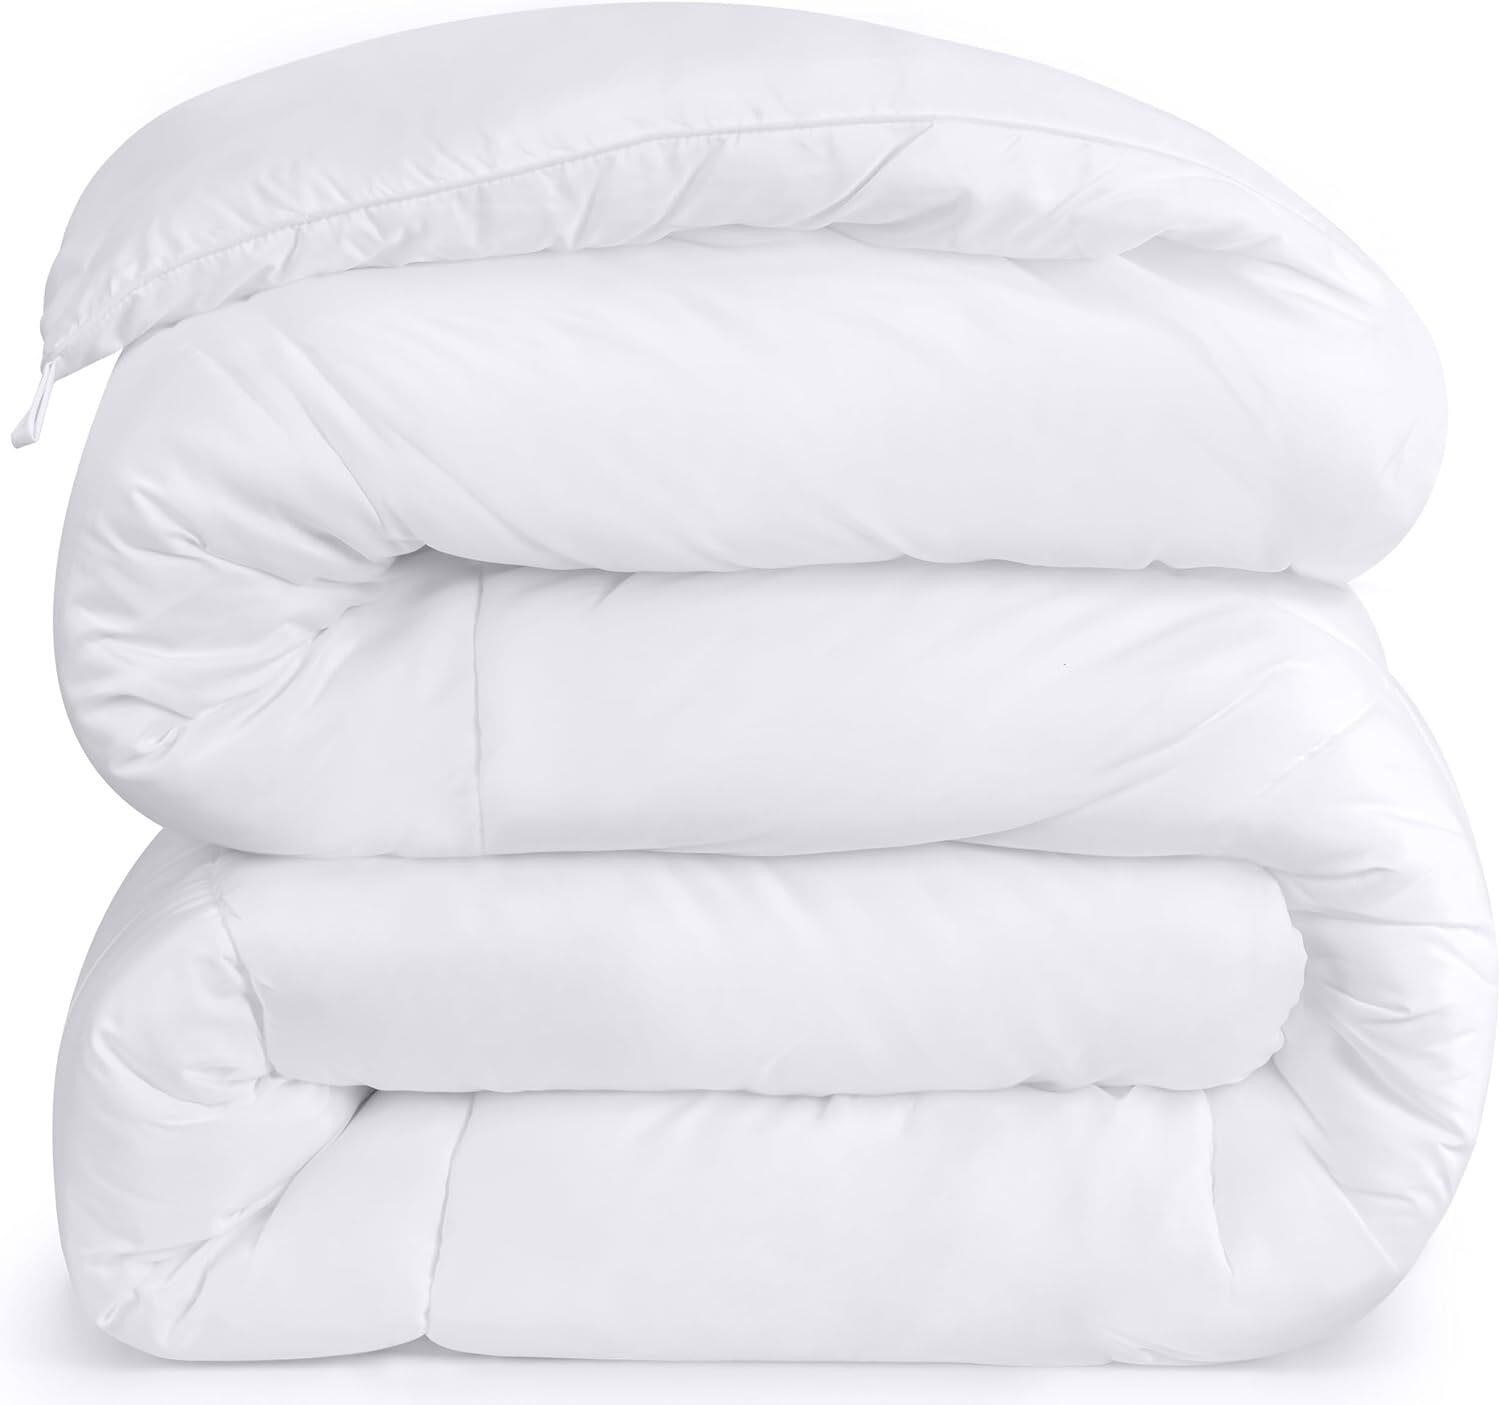 Utopia Bedding Comforter Twin White